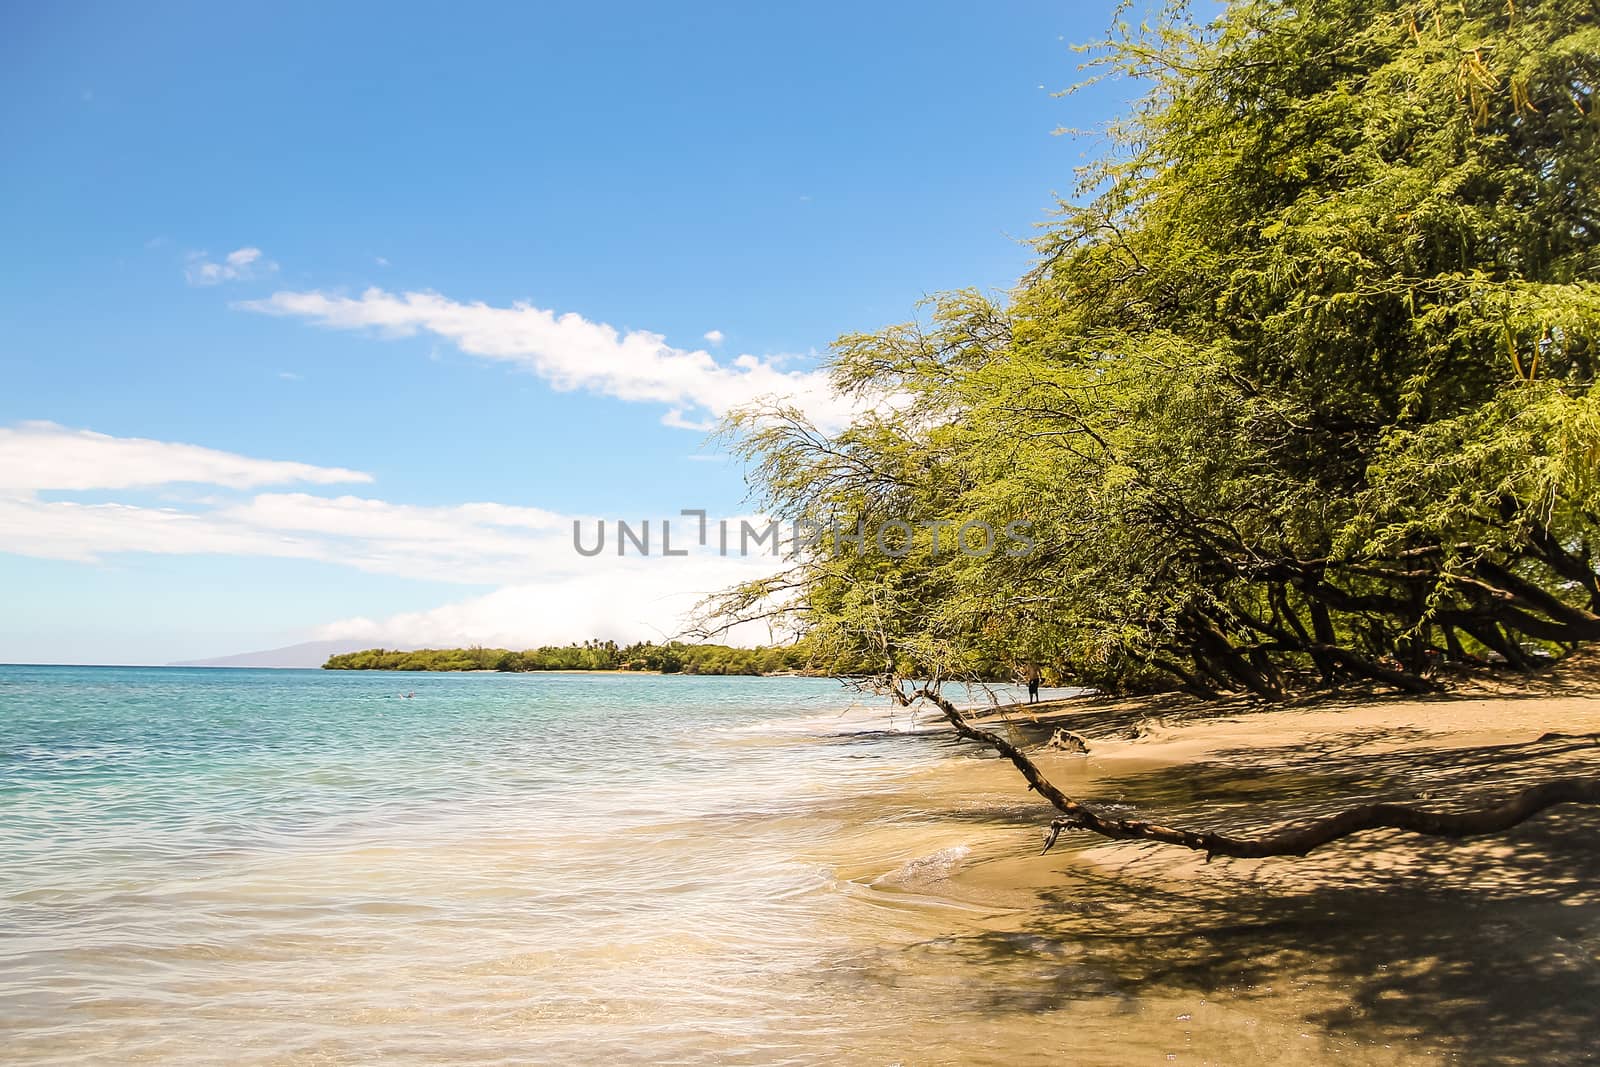 Beautiful Maui beach by Alexanderphoto